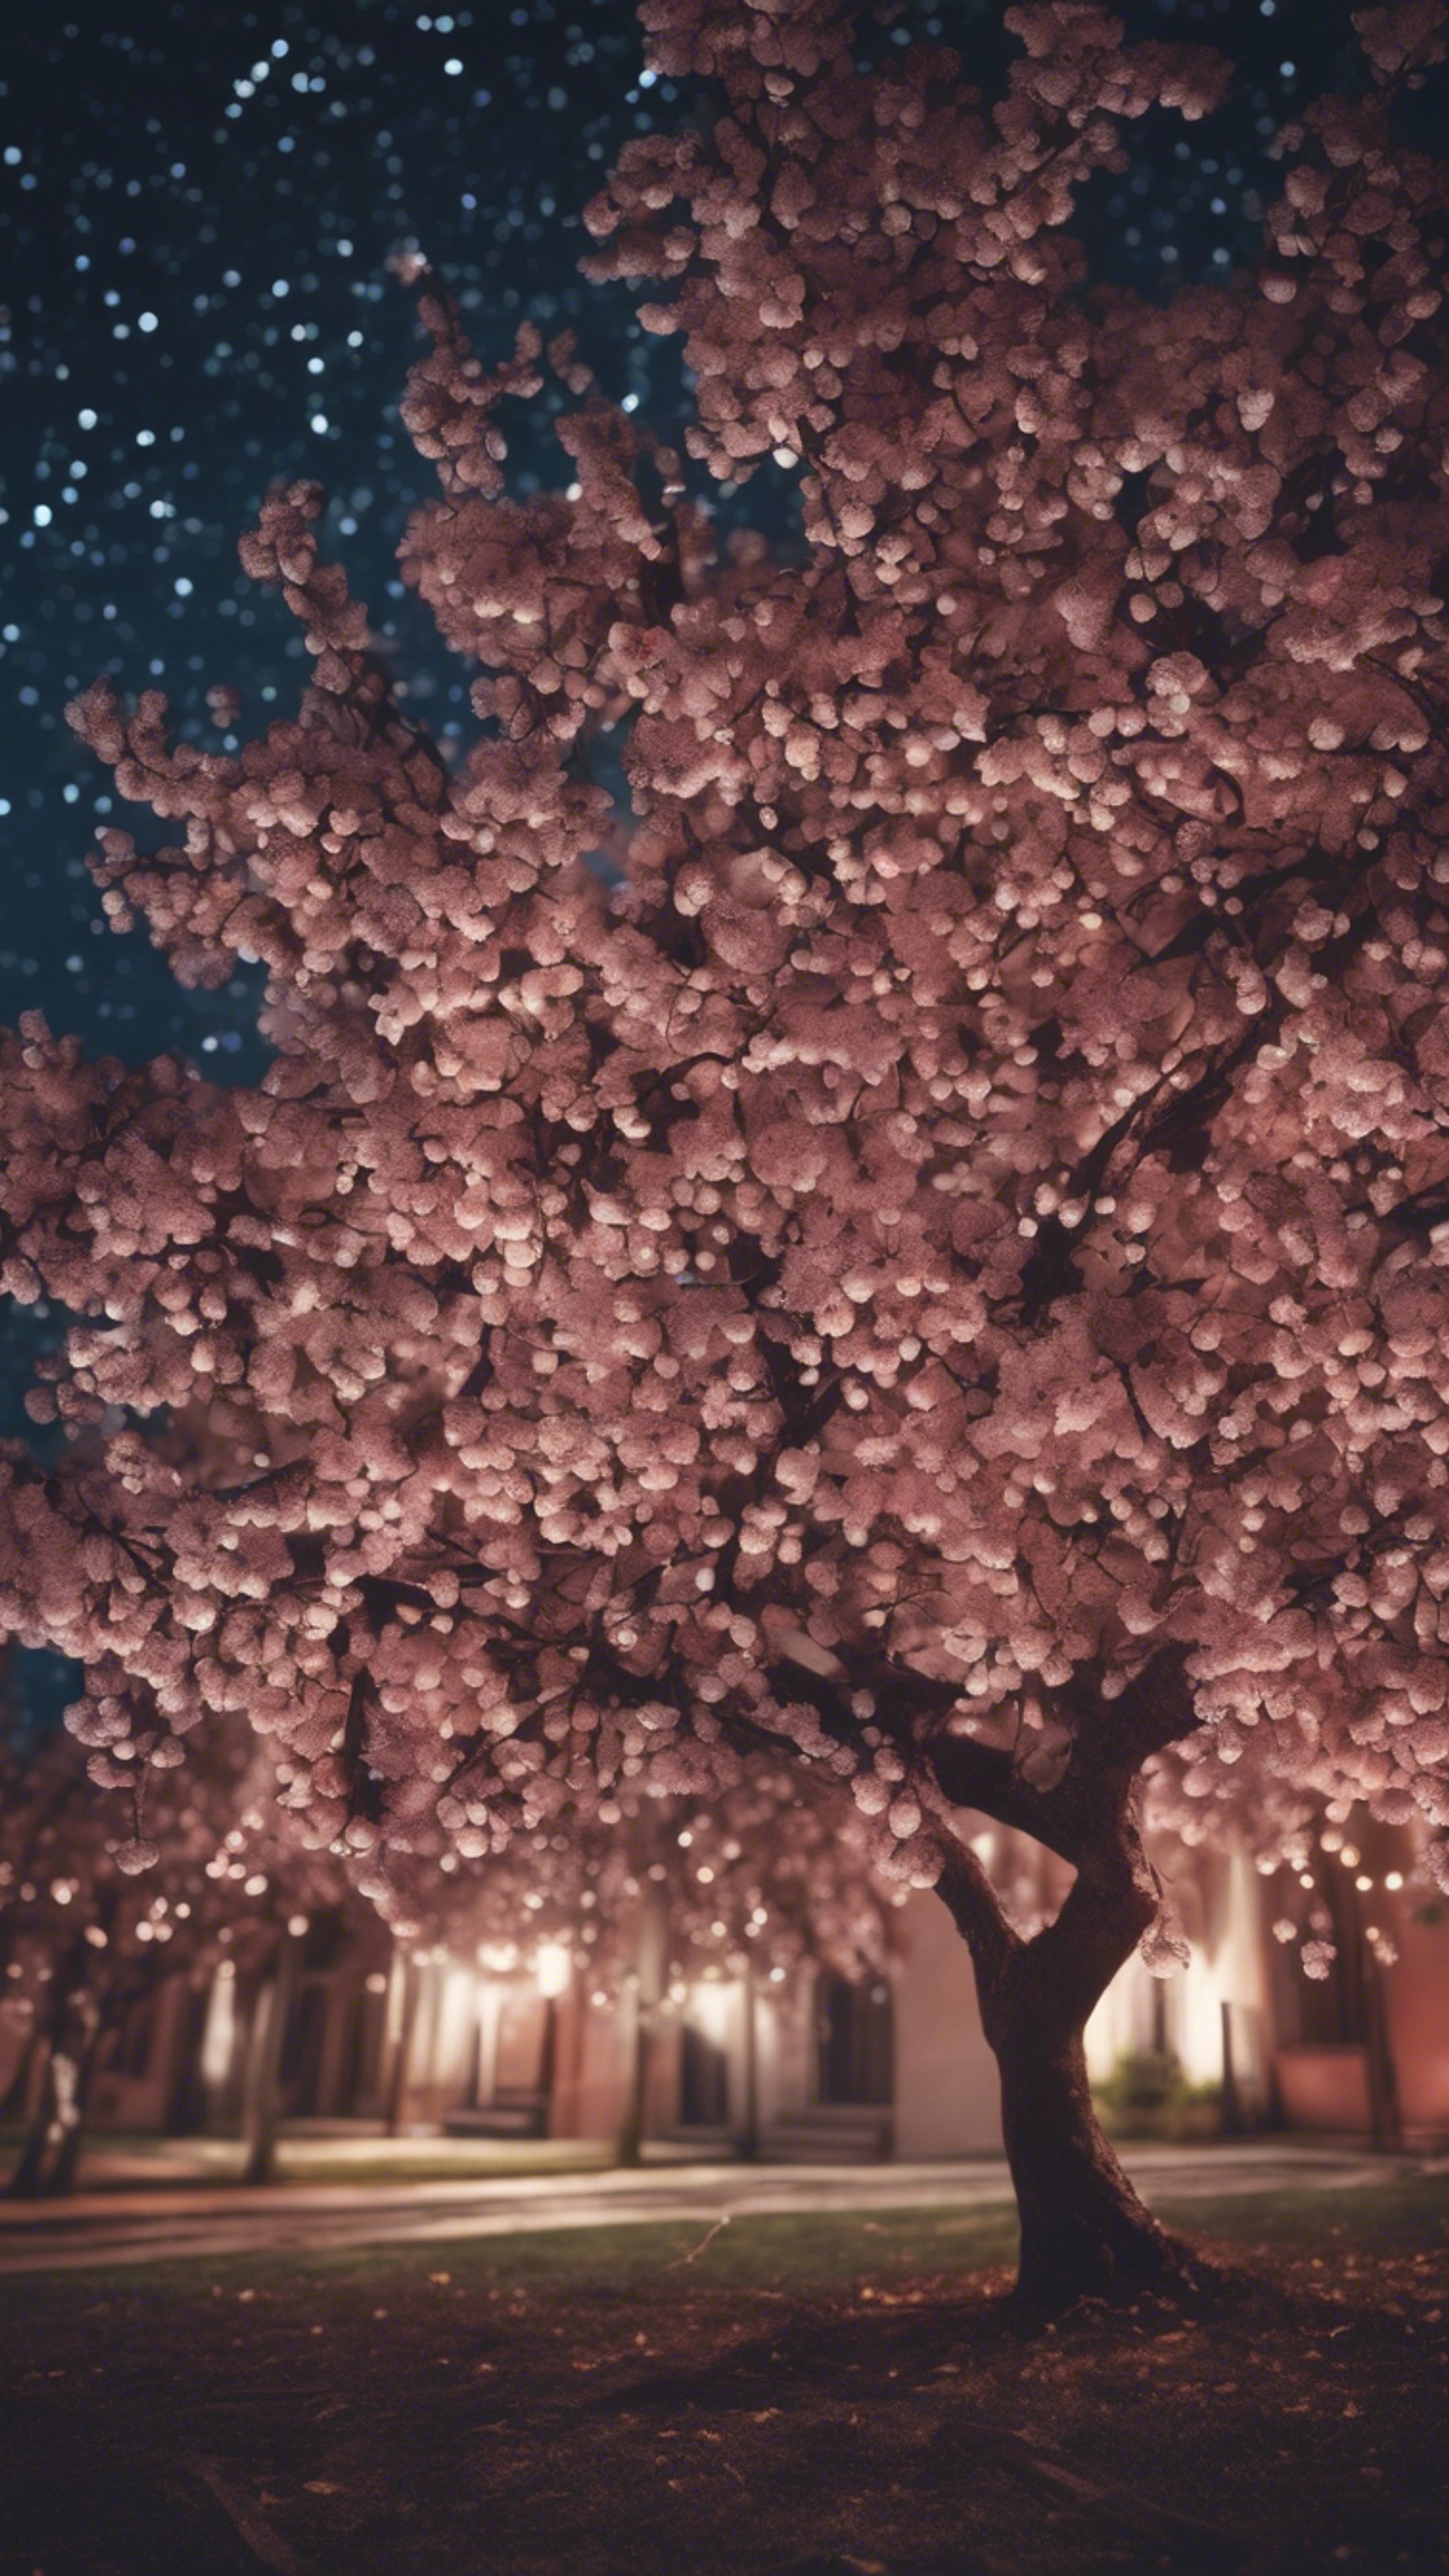 A night scene of a cherry tree full of fruits under a starry sky.壁紙[15de247c6d2a49778baa]